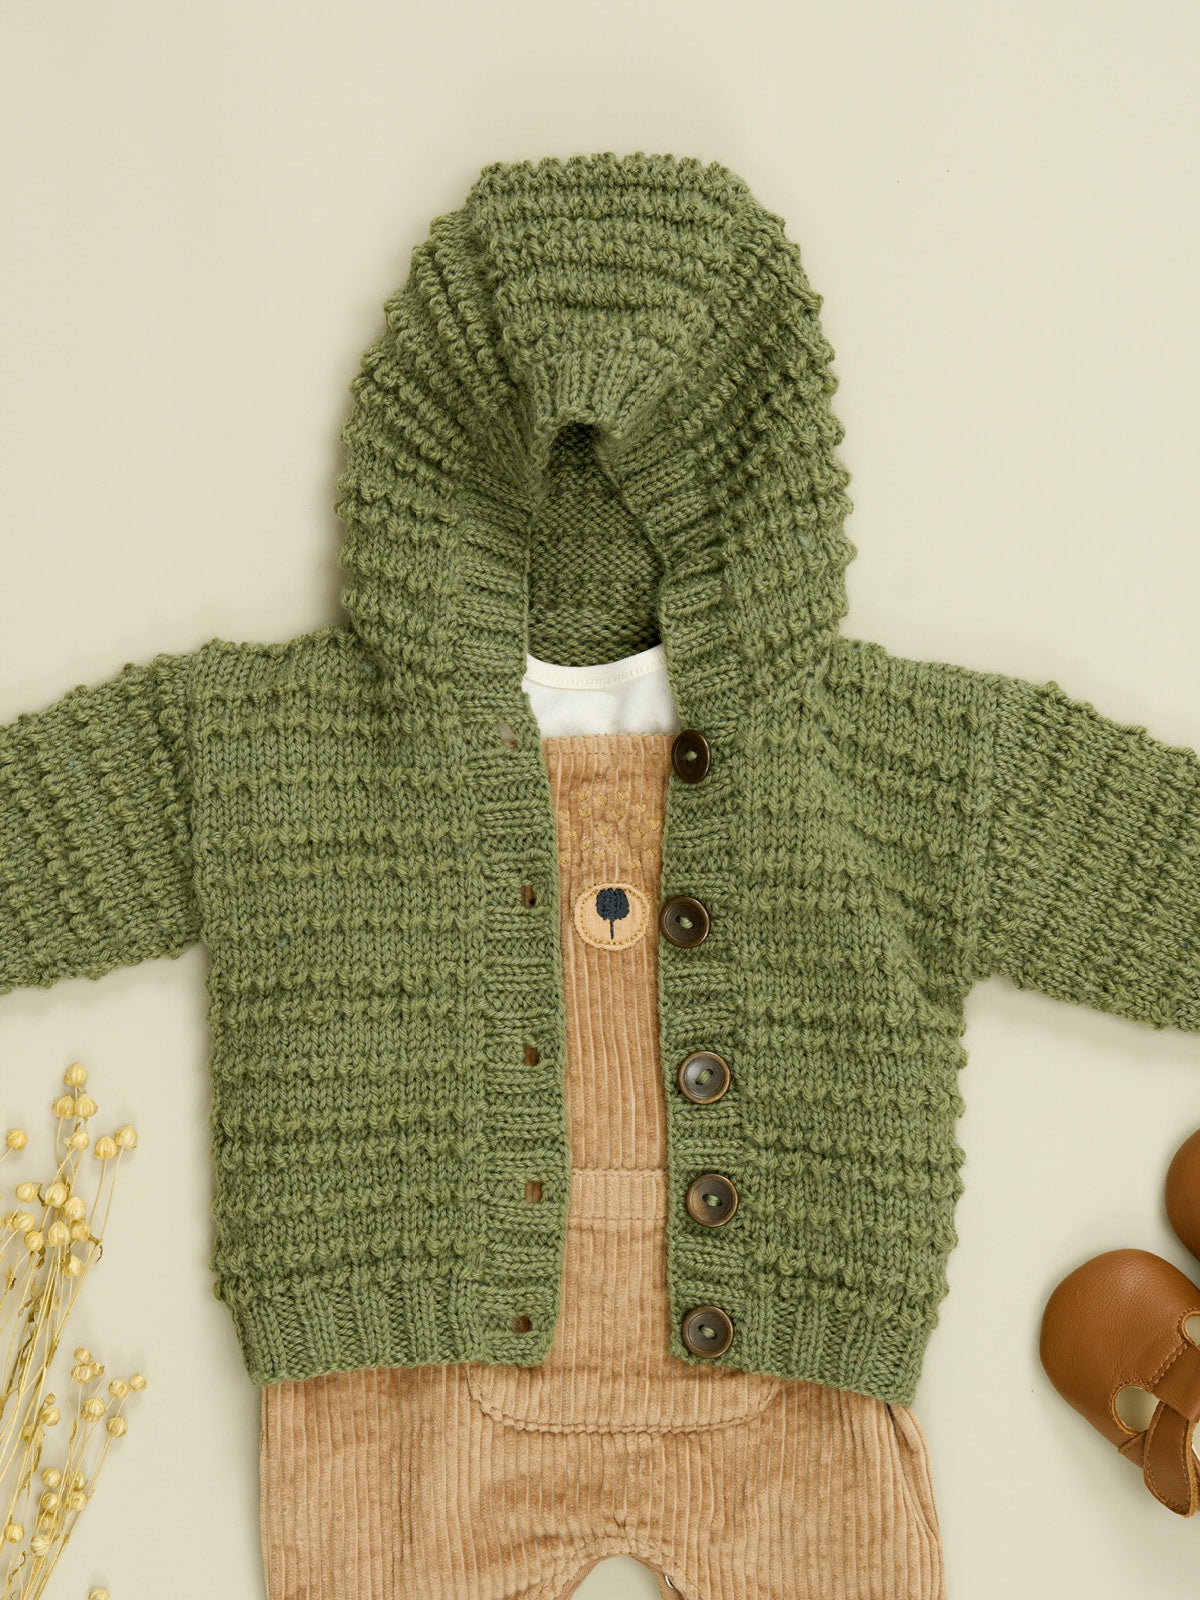 WYS Charlie: Textured Hoody & Cardigan in Bo Peep DK by Sarah Hatton - Knitting Kit